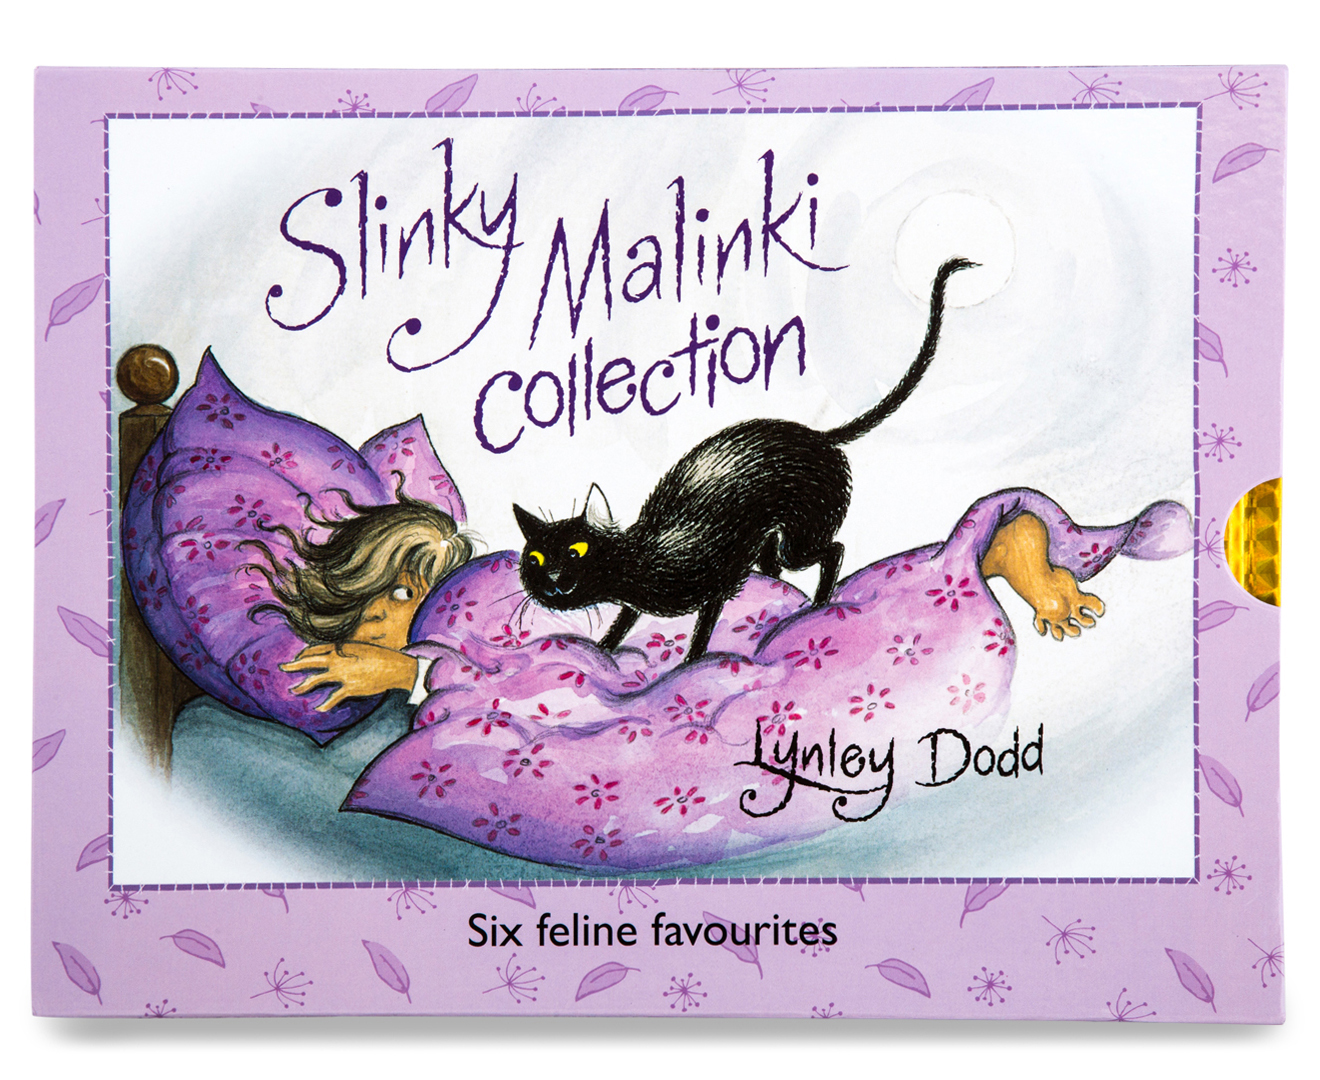 slinky malinki book collection